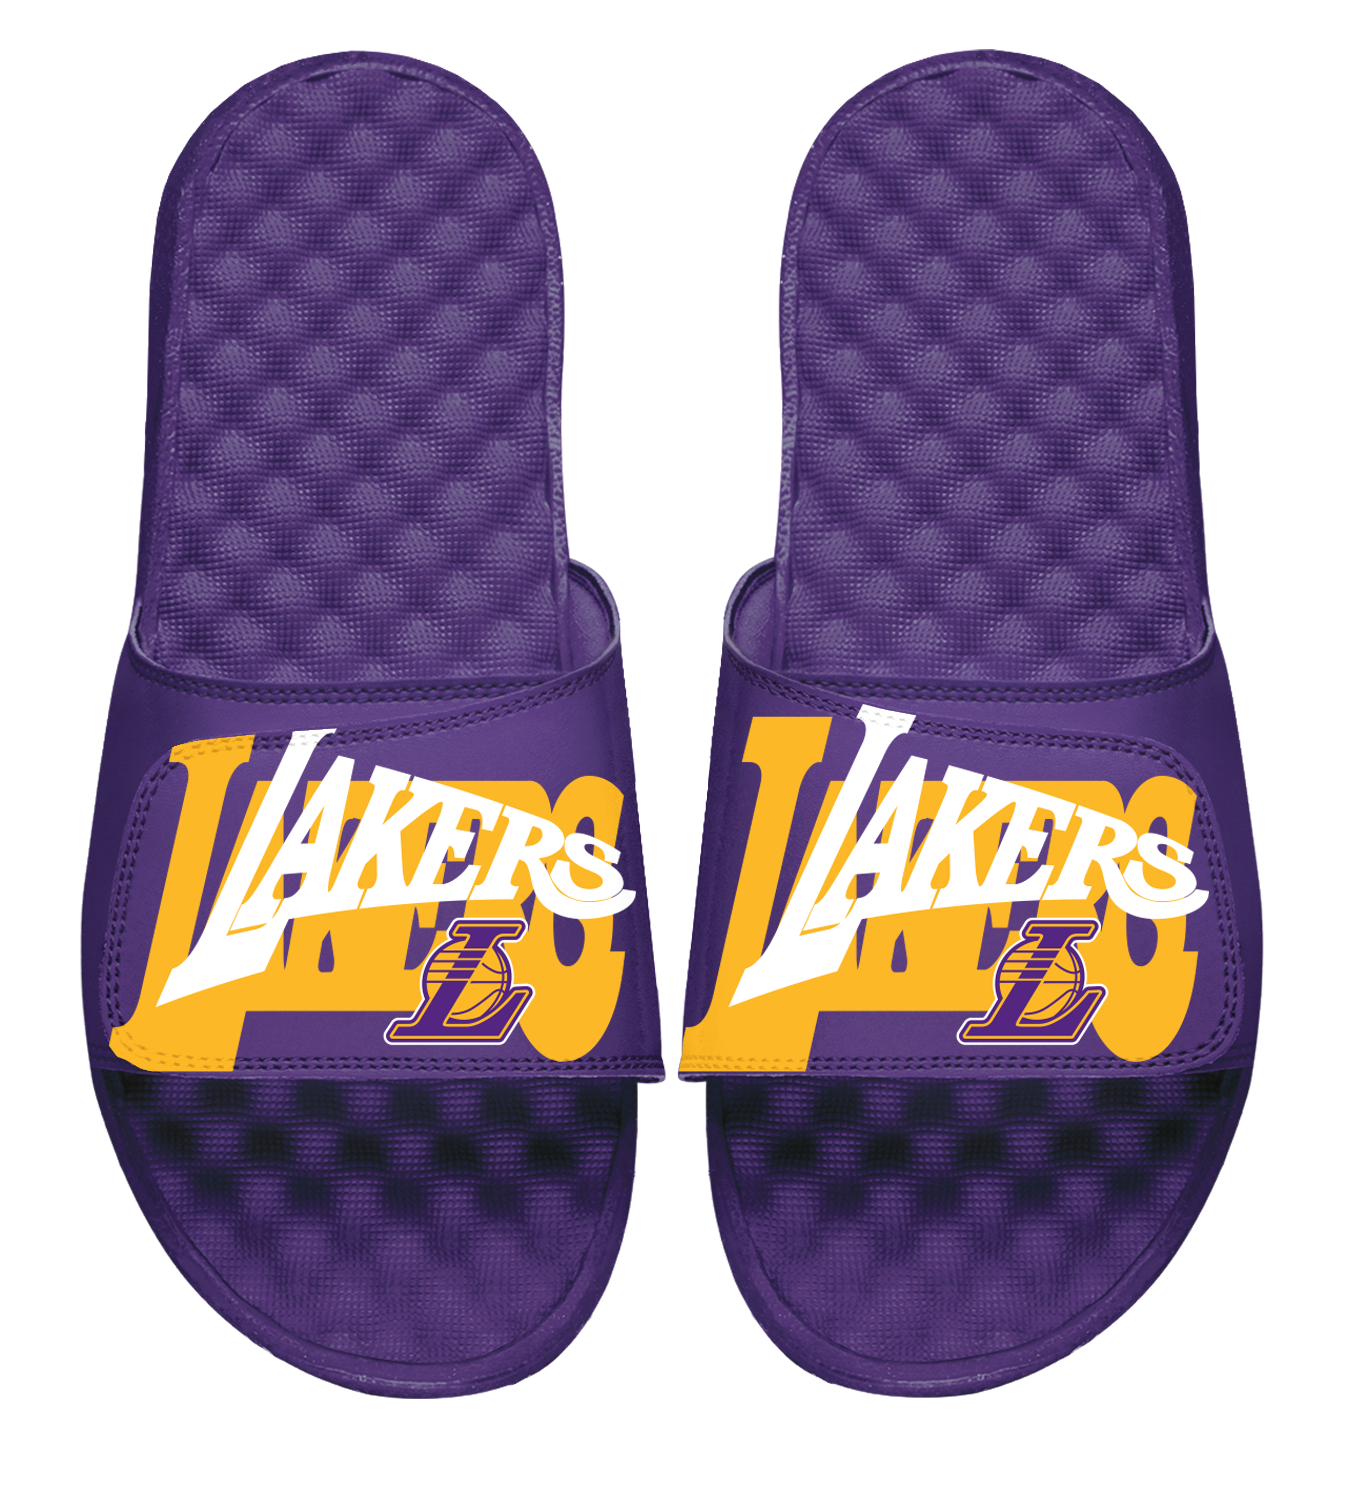 Lakers 23 Warped Slides